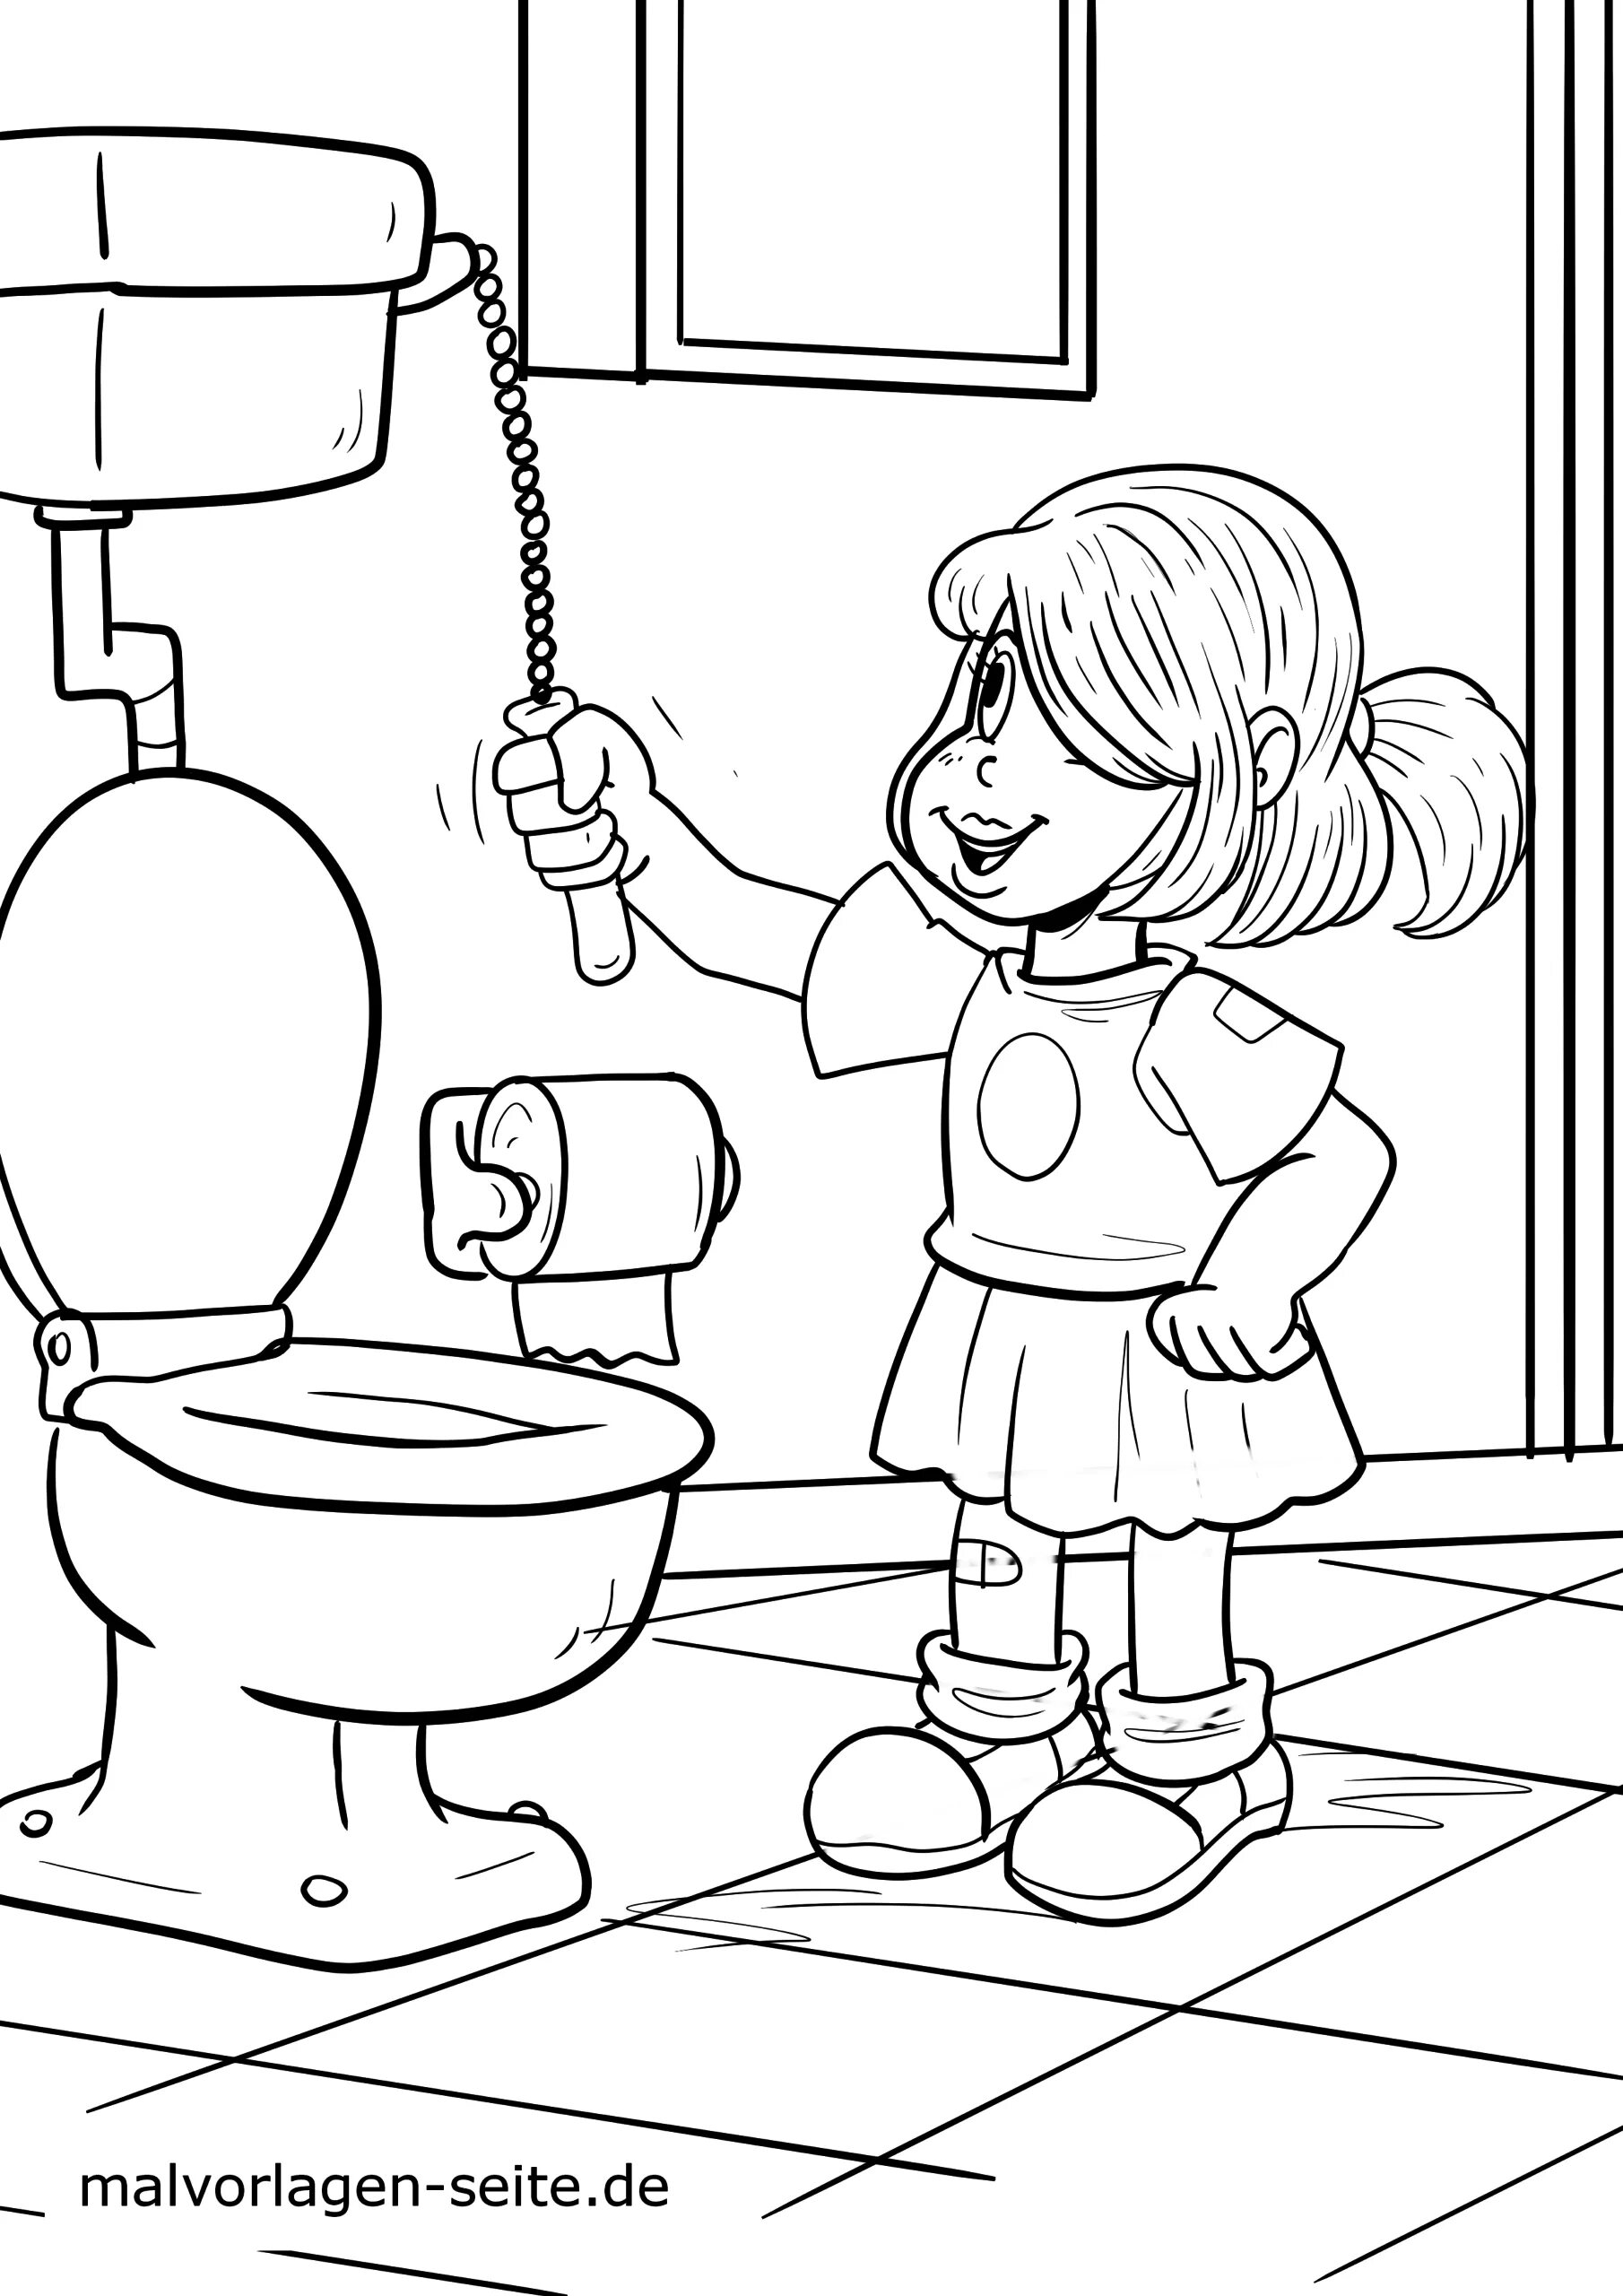 Сказочная страница раскраски туалета для детей